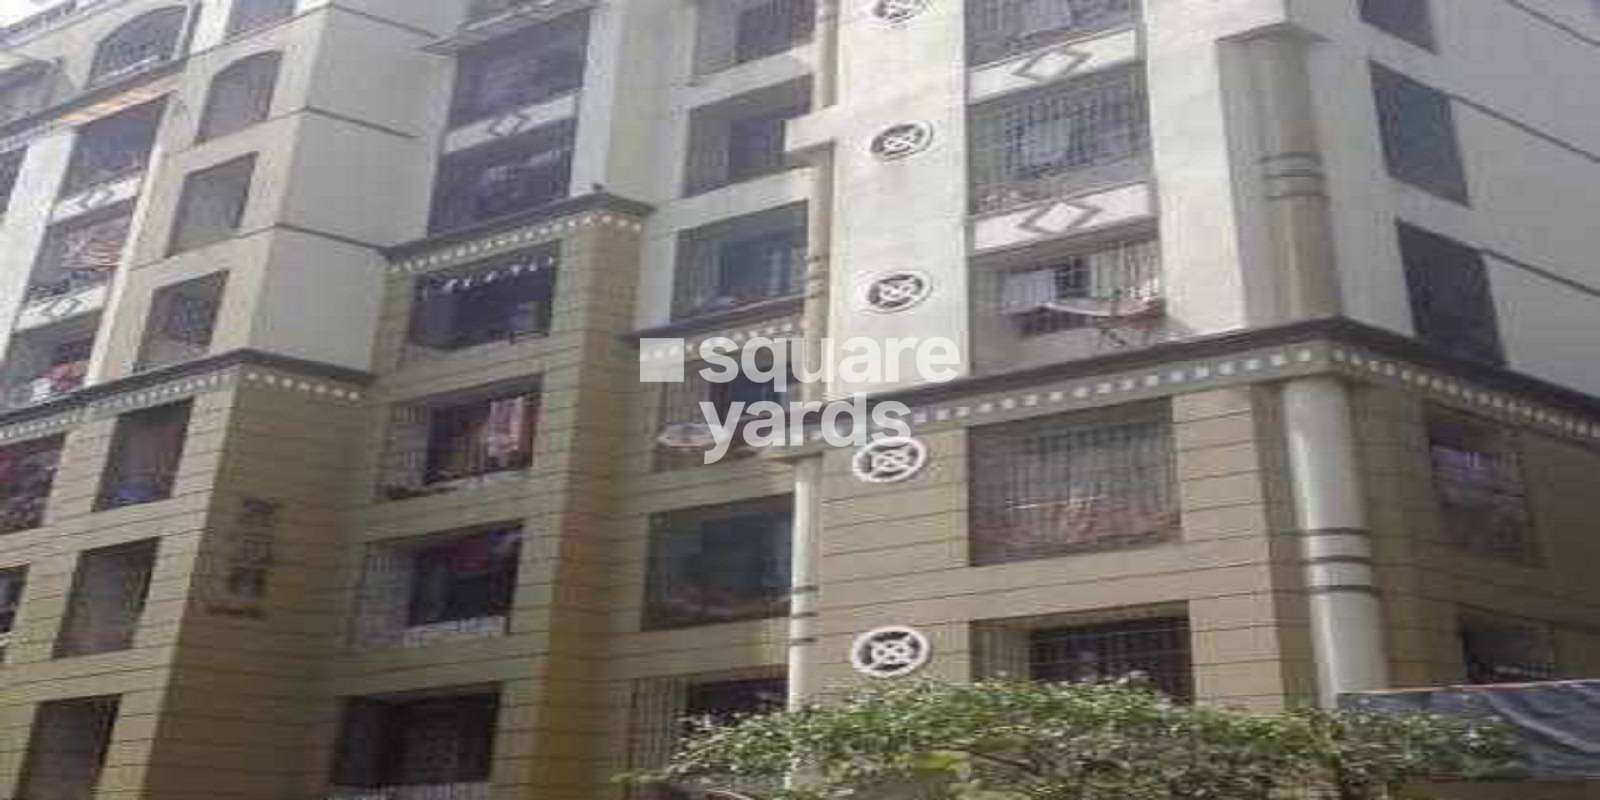 Anil Apartment CHS LTD Cover Image